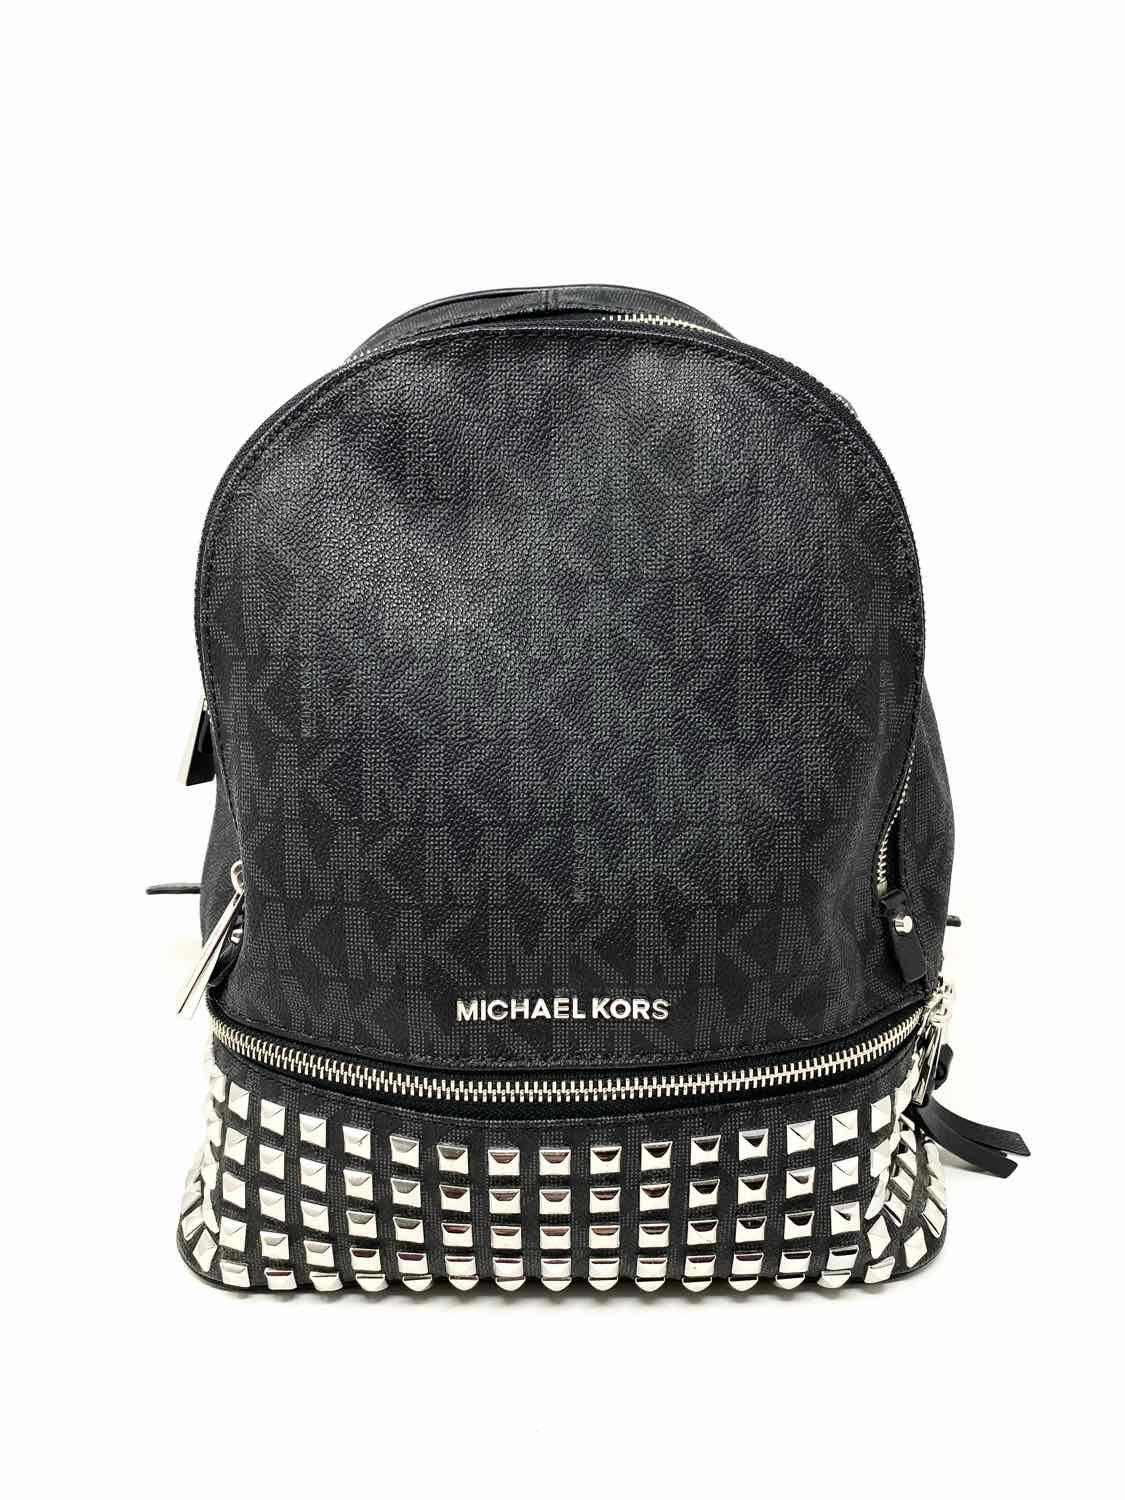 Michael Kors Leather Black/Silver Monogram BackPack - Article